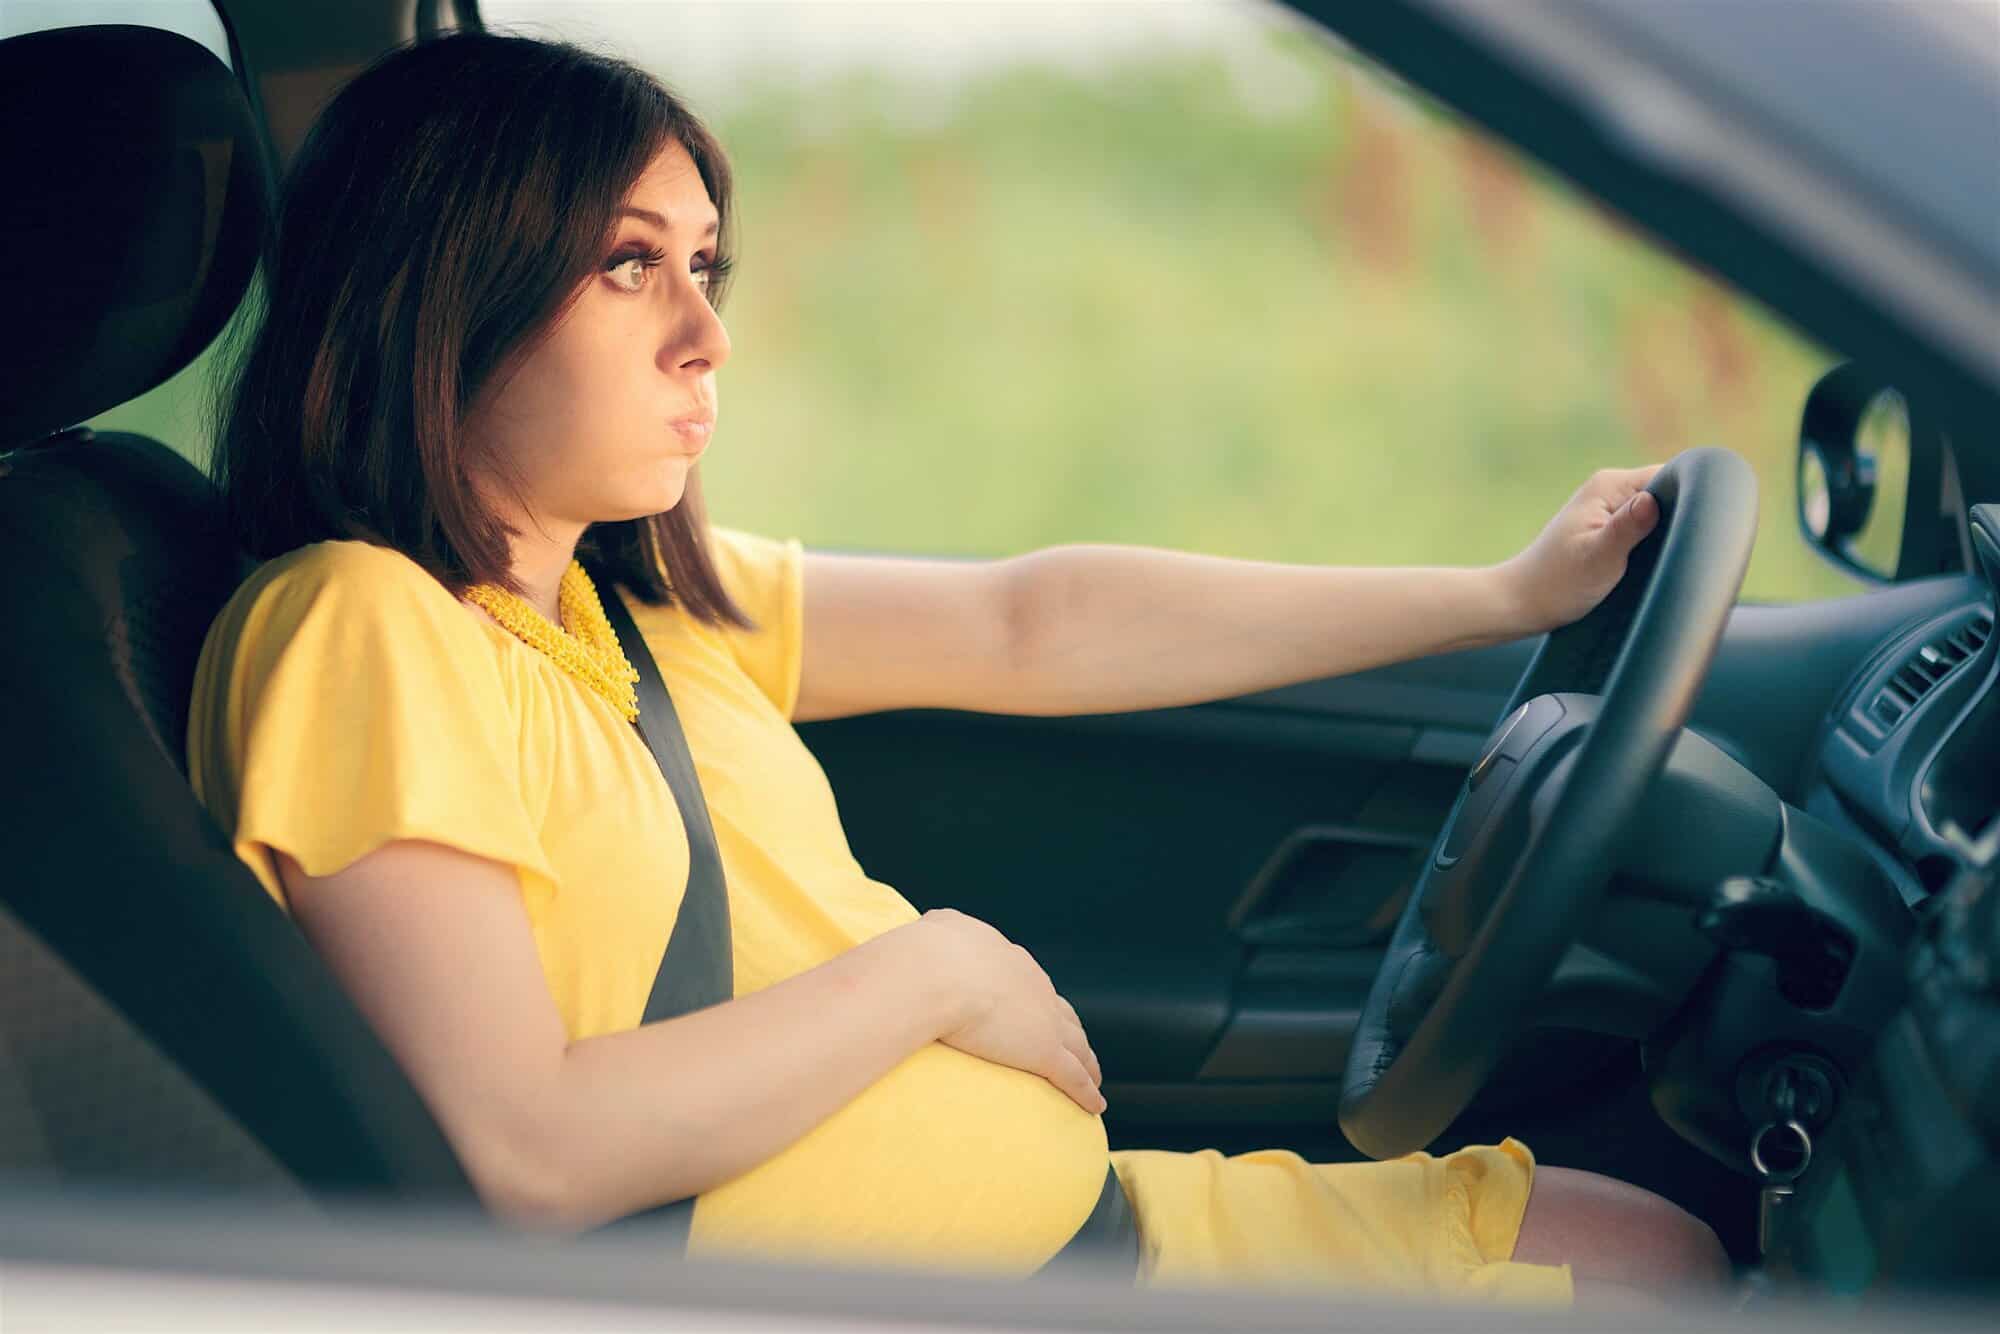 Embarazada al volante, ¿misión imposible? - Criar con Sentido Común